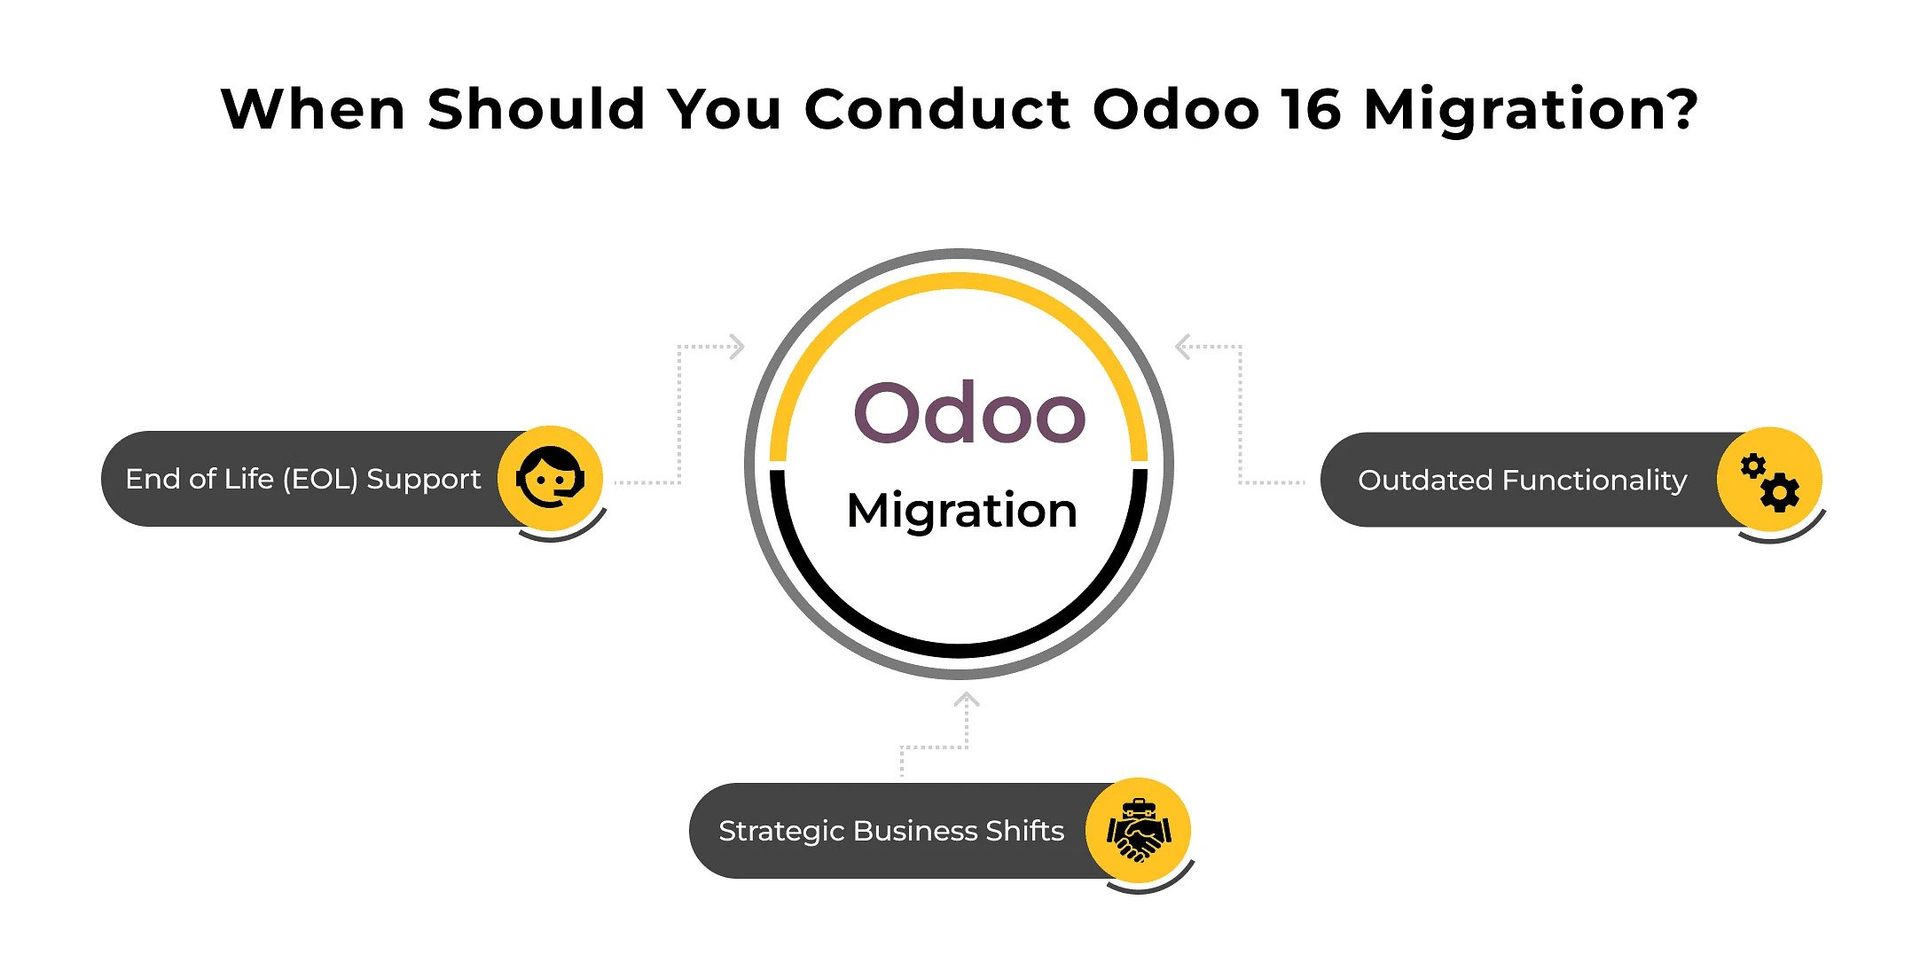 Odoo 16 Migration